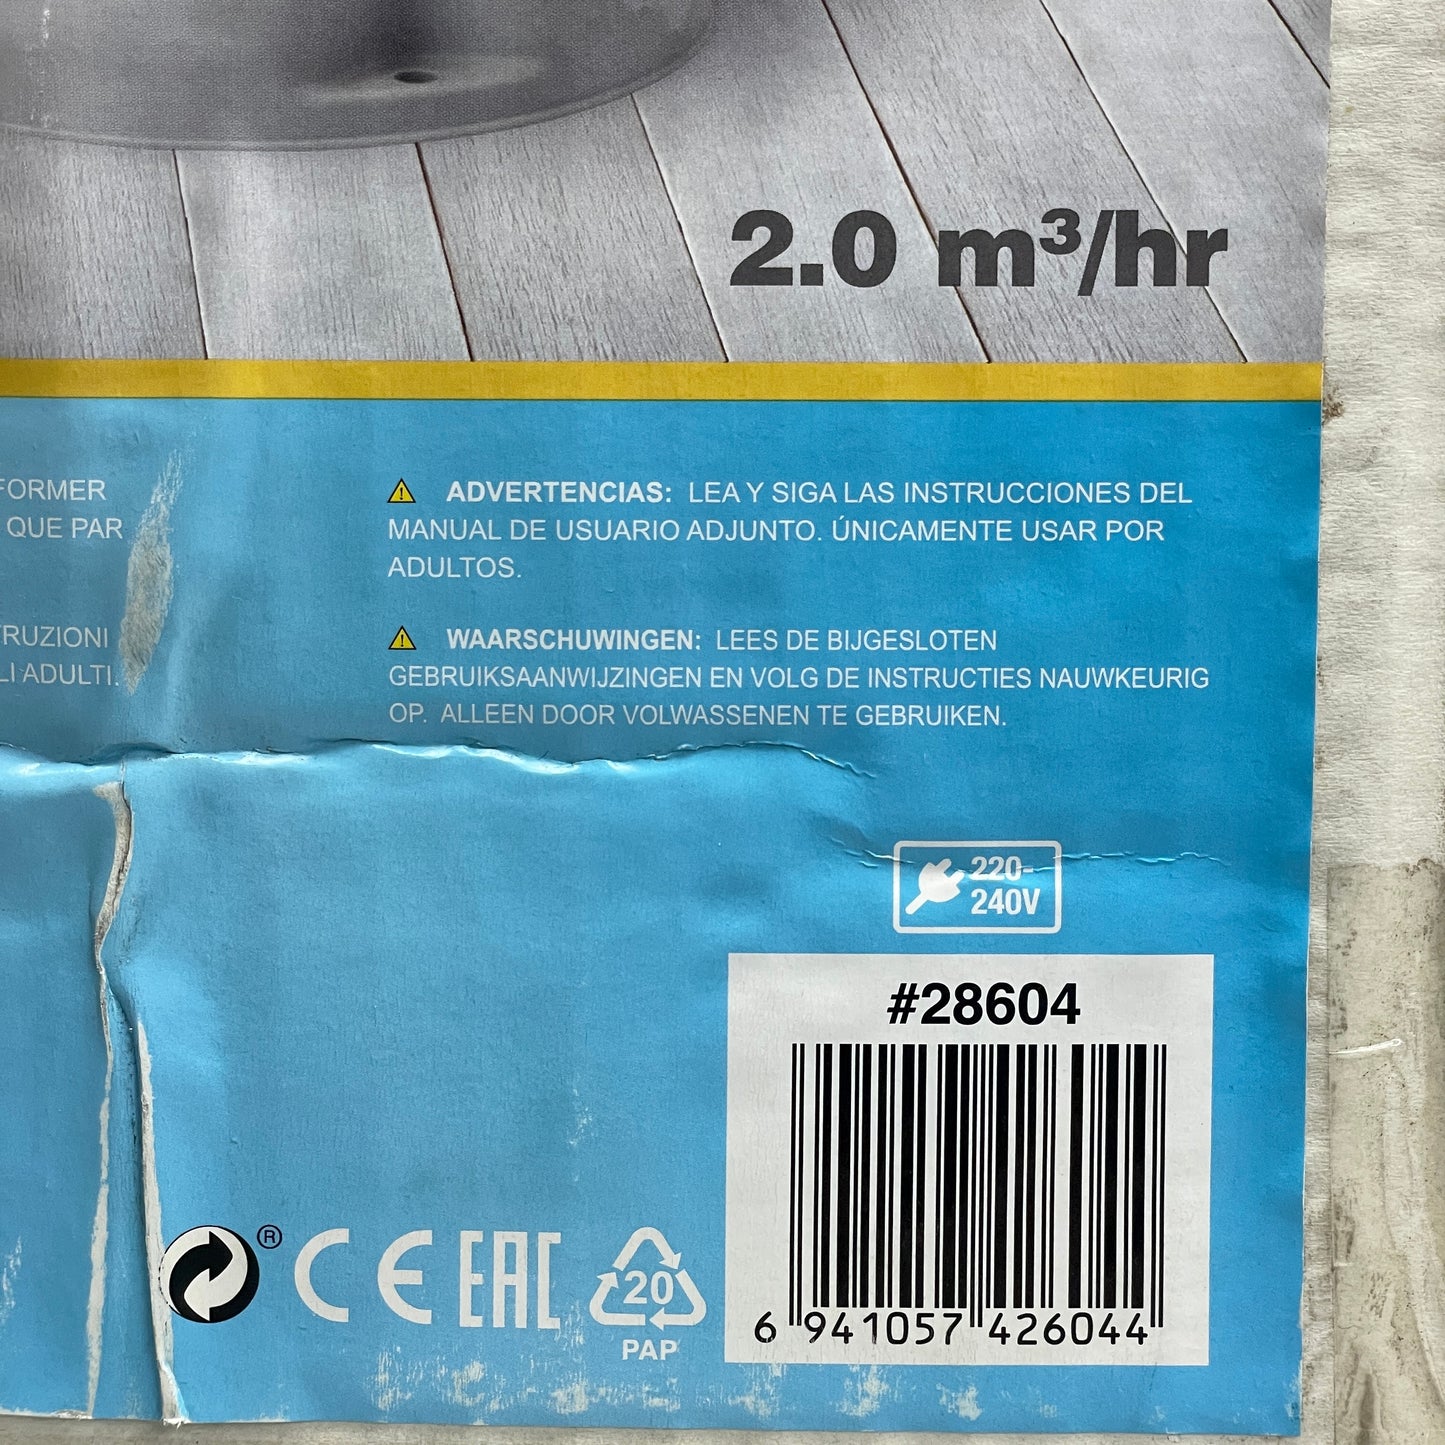 ZA@ INTEX Krystal Clear™ Cartridge Filter Pump #604 LOT OF 2! (AS-IS, New, Open/Damaged-Box)